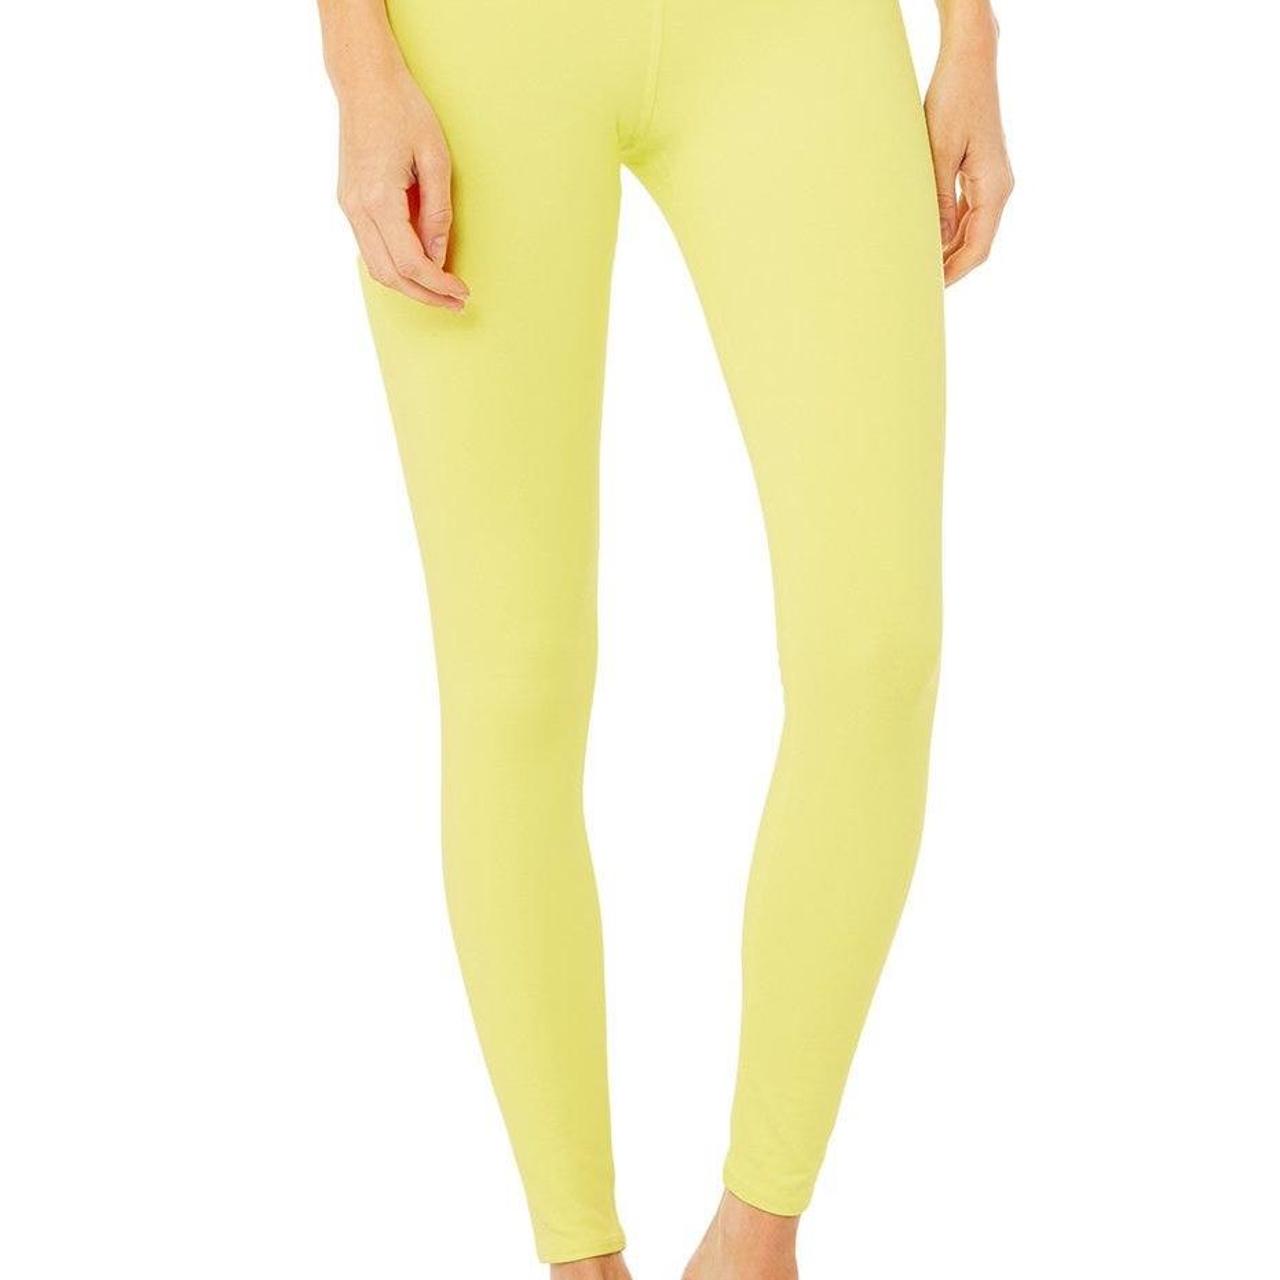 Alo yoga 7/8 airbrush leggings in 🍋 neon yellow - Depop